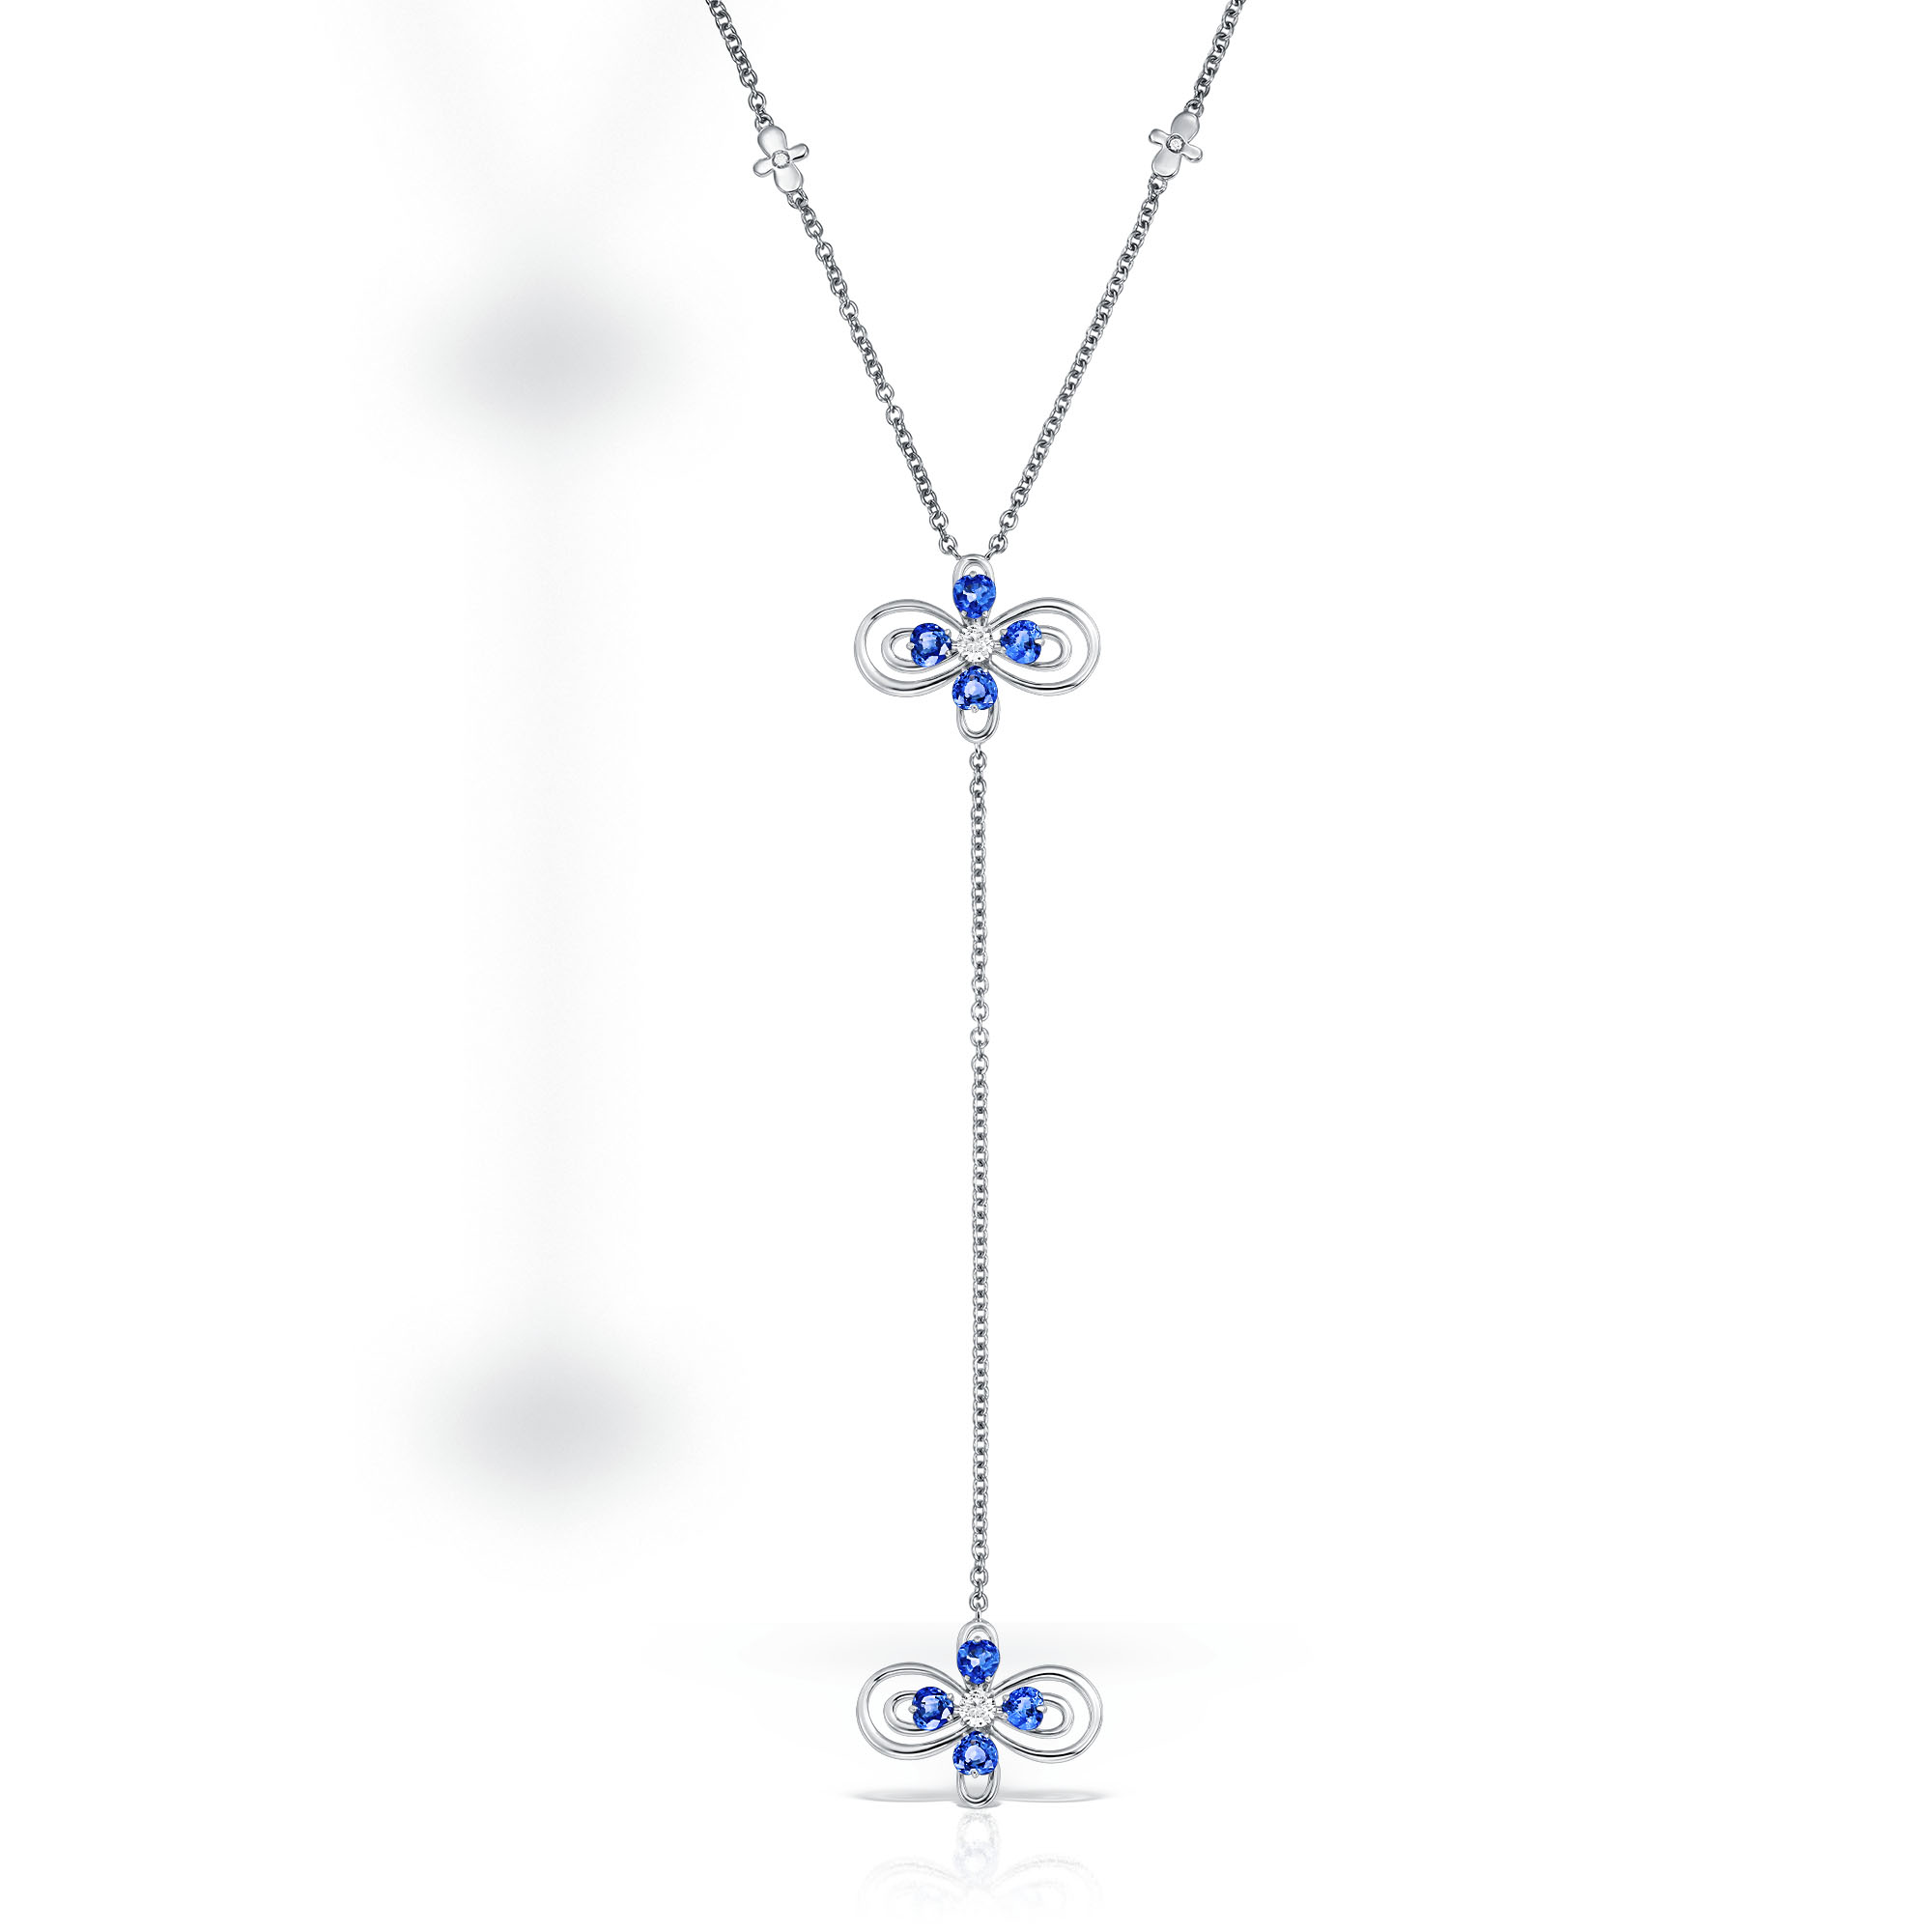 Henri Maillardet - Infinity Flower Diamond Necklace in 18K rosé gold